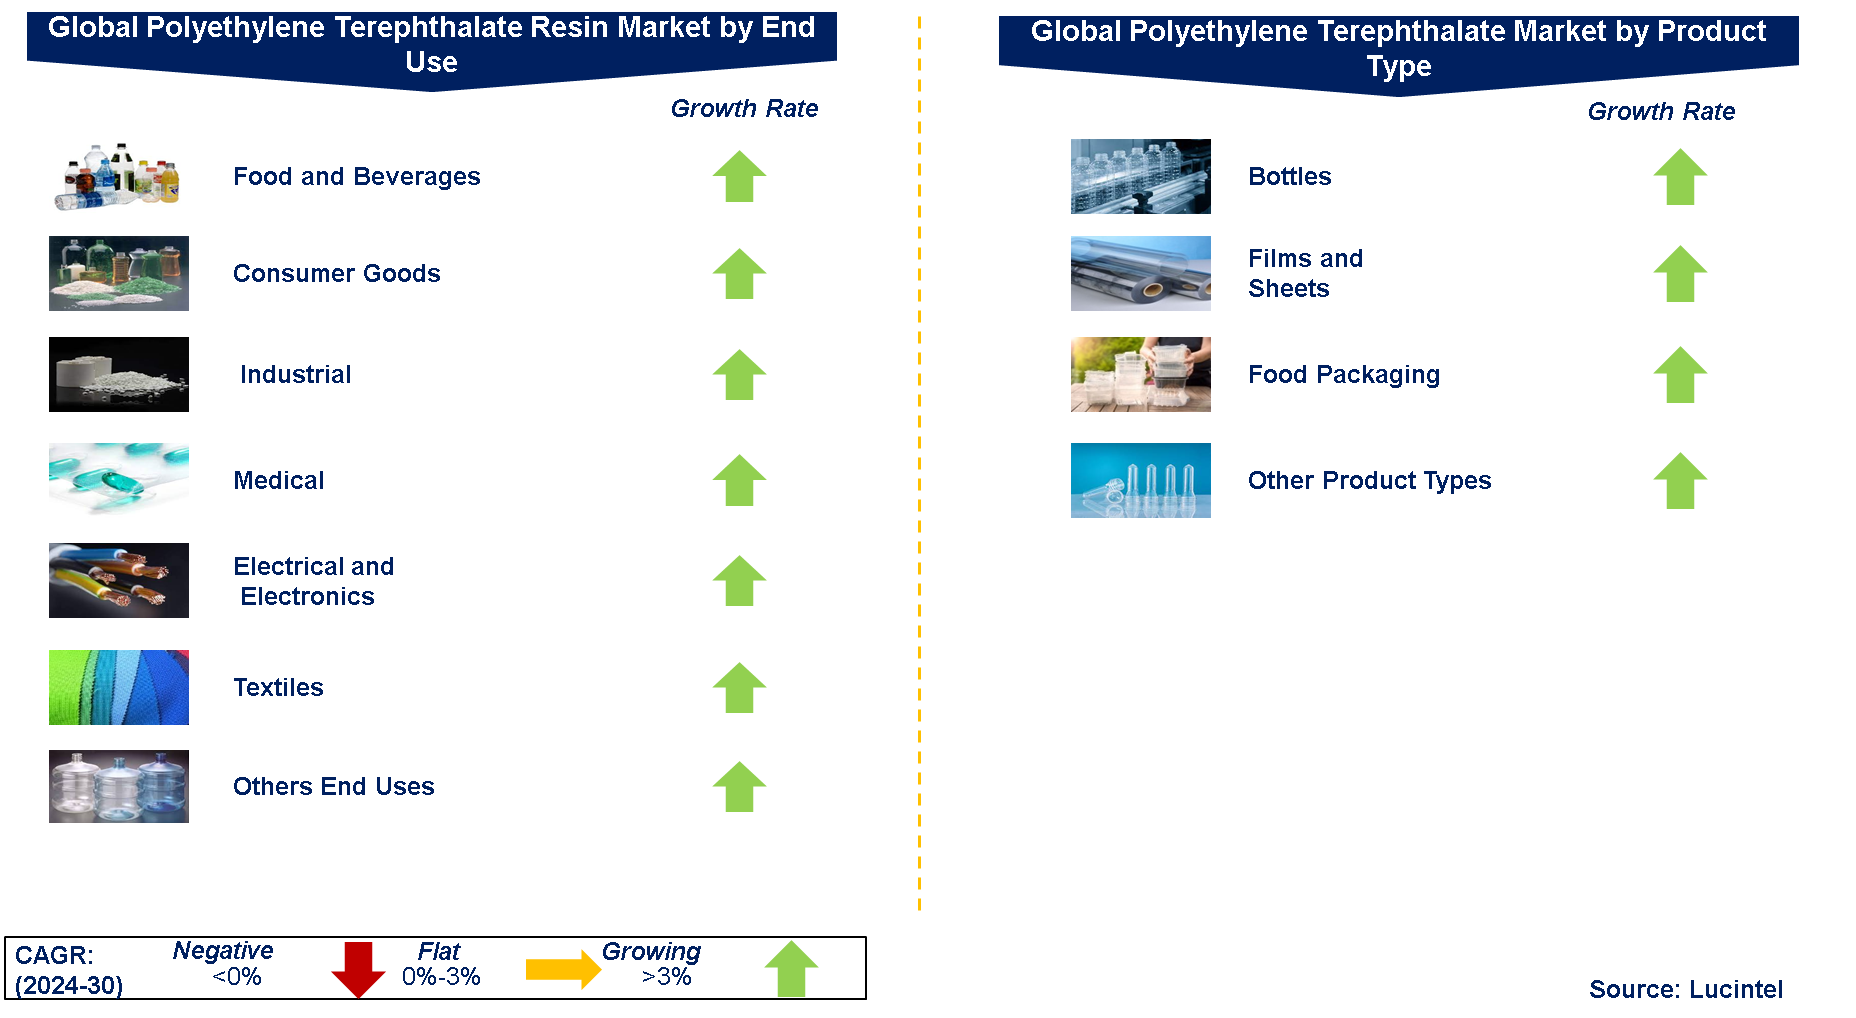 Polyethylene Terephthalate Resin Market by Segments